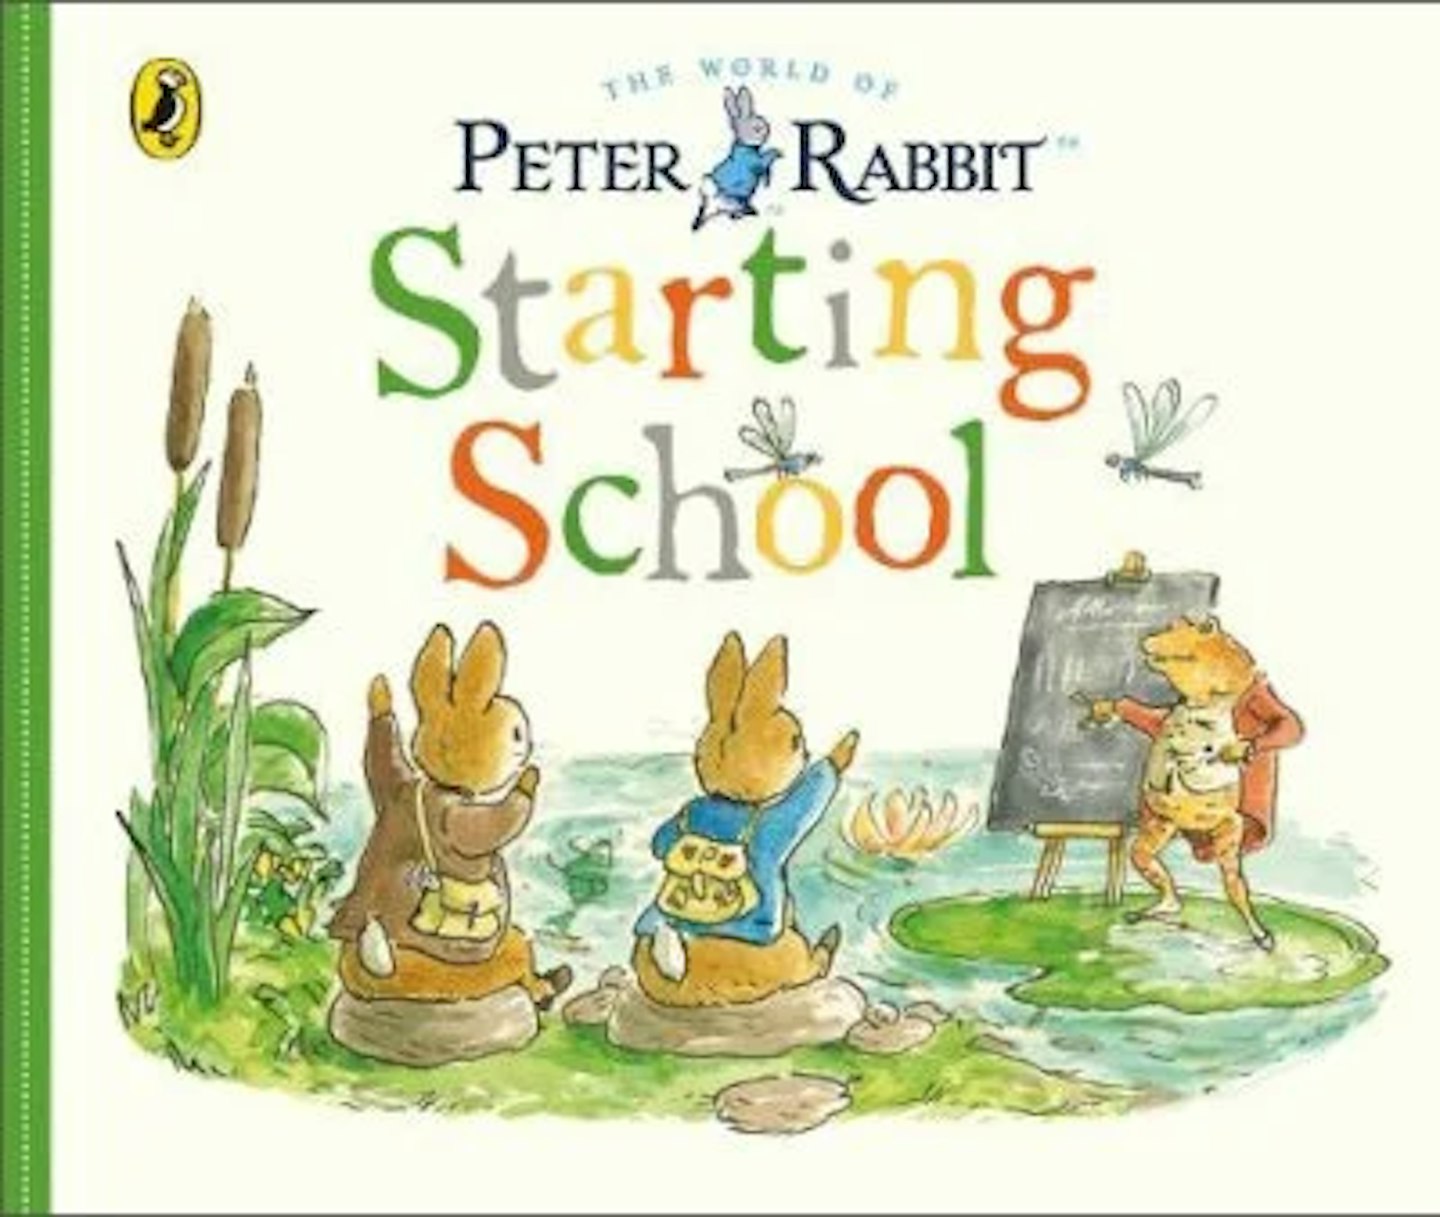 Peter Rabbit Tales: Starting School, by Beatrix Potter (3+, Fiction) 